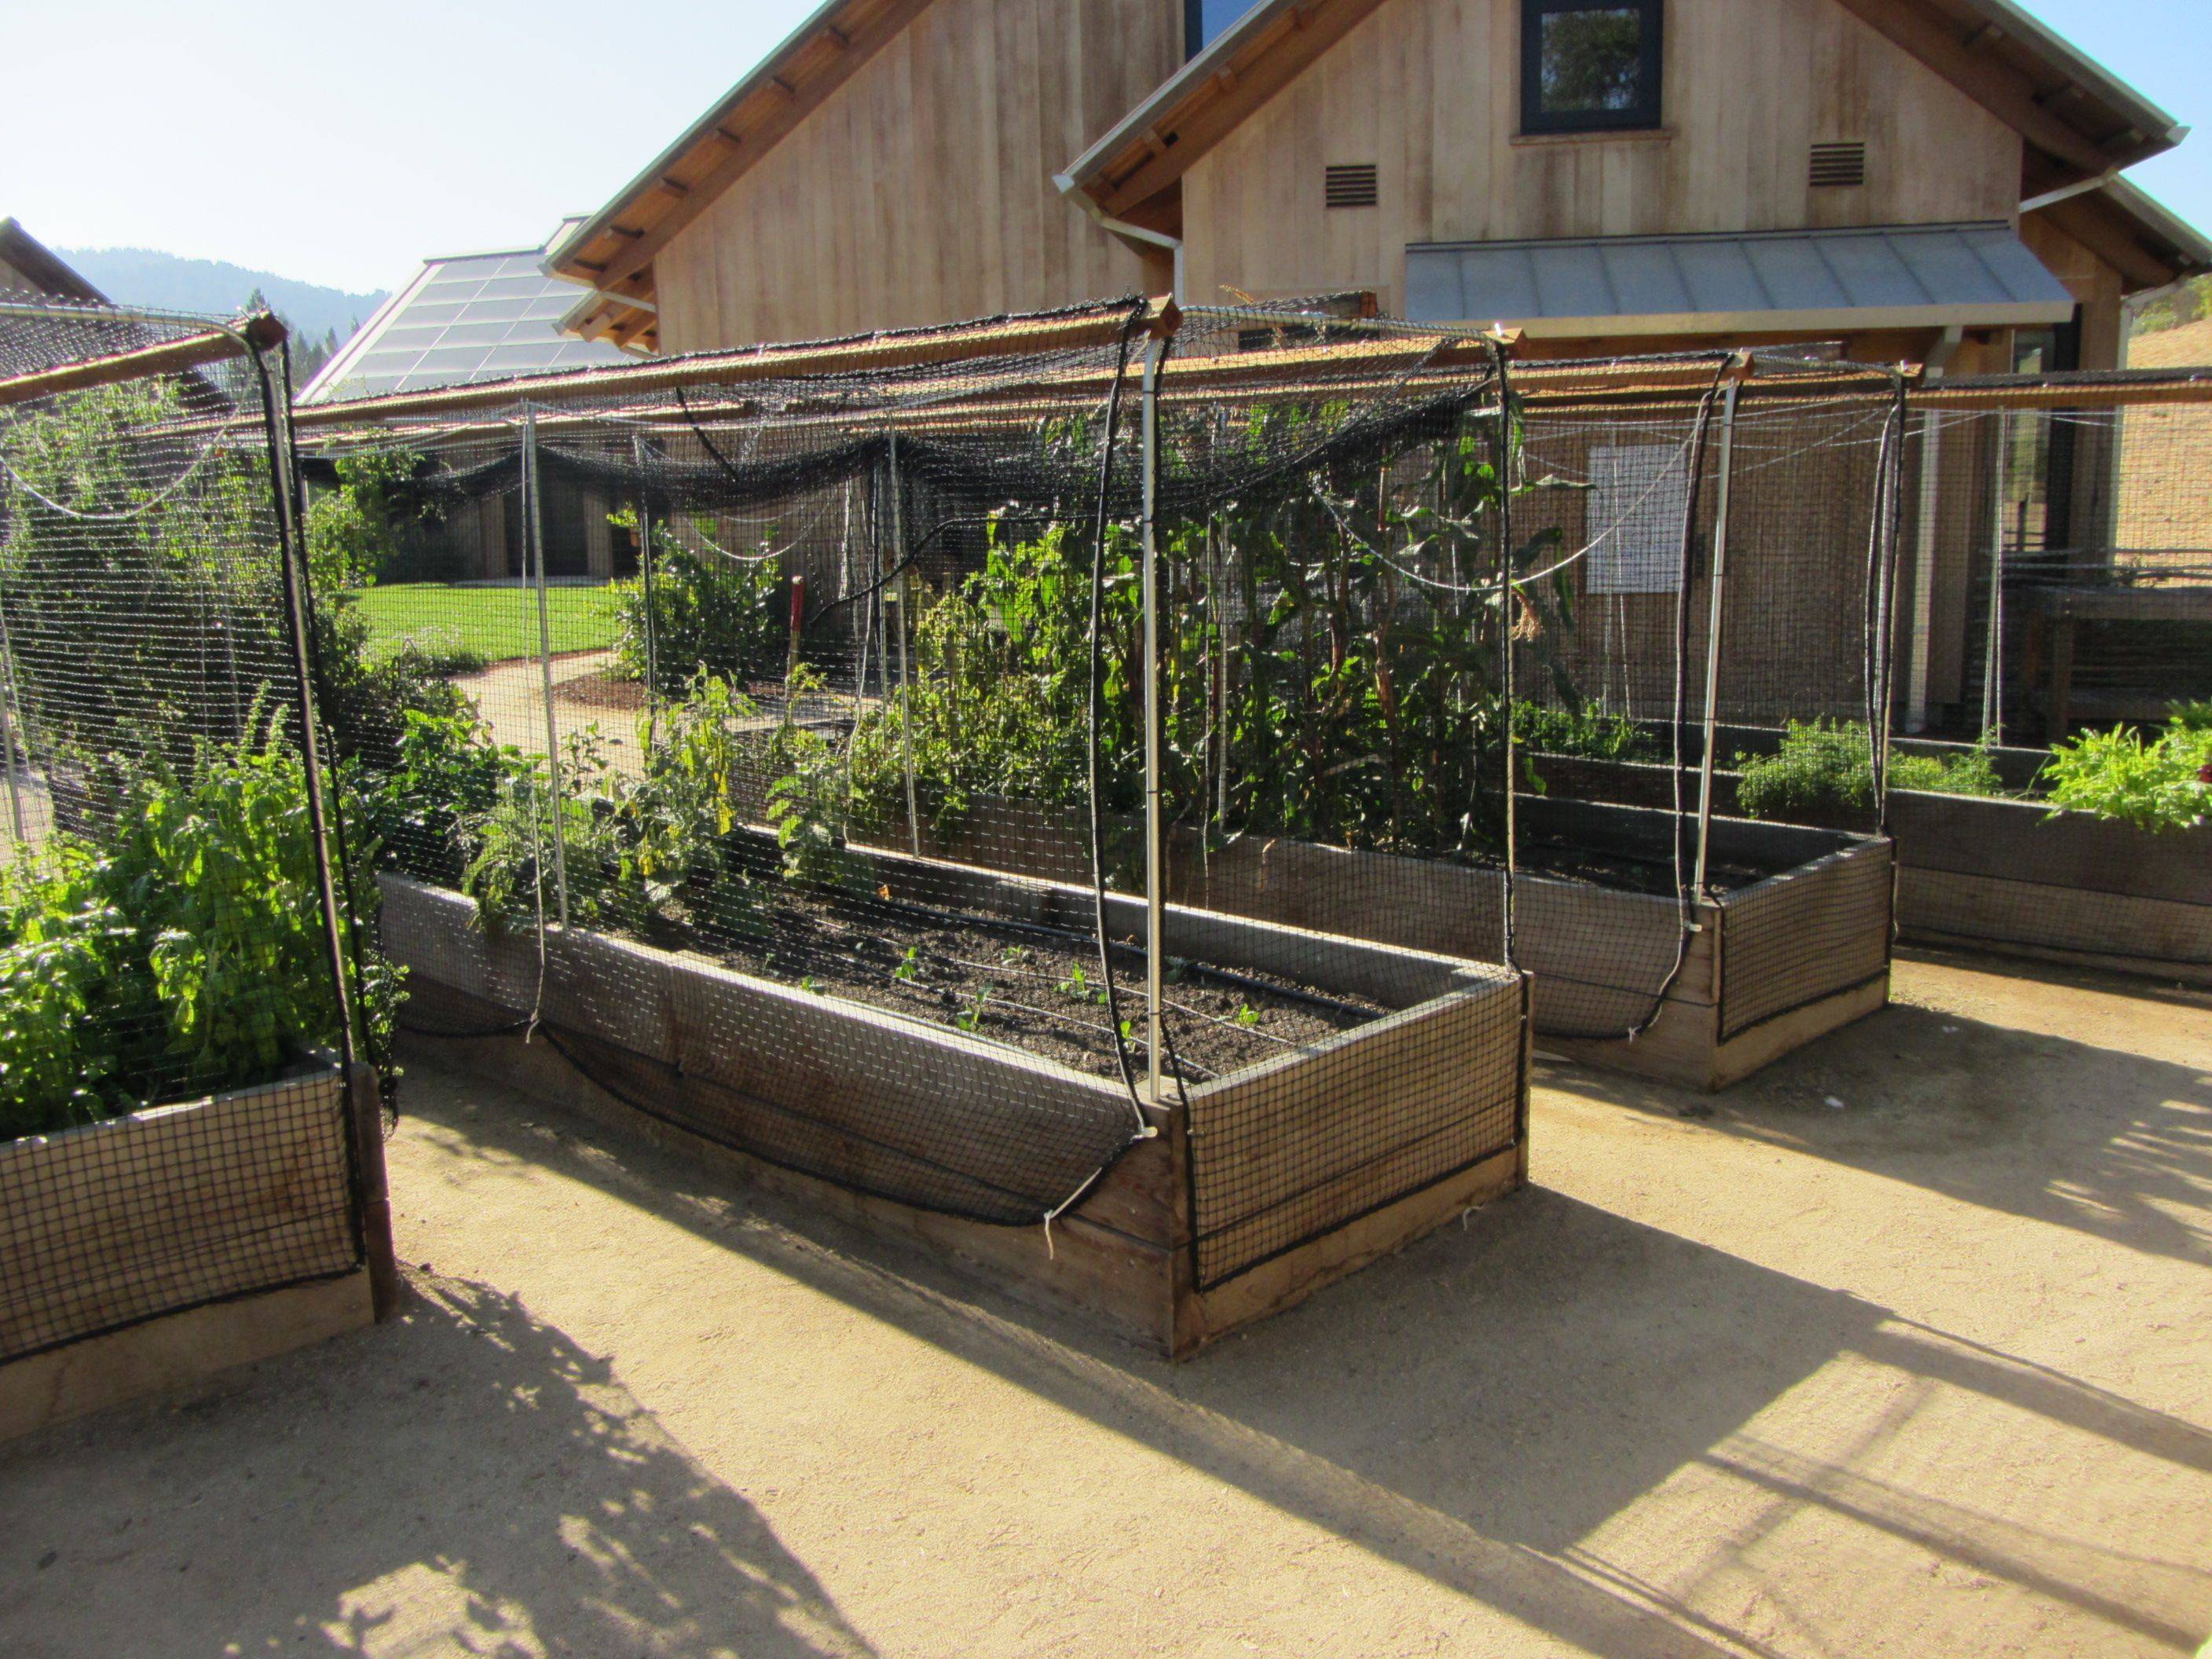 Enclosed Vegetable Garden Plans